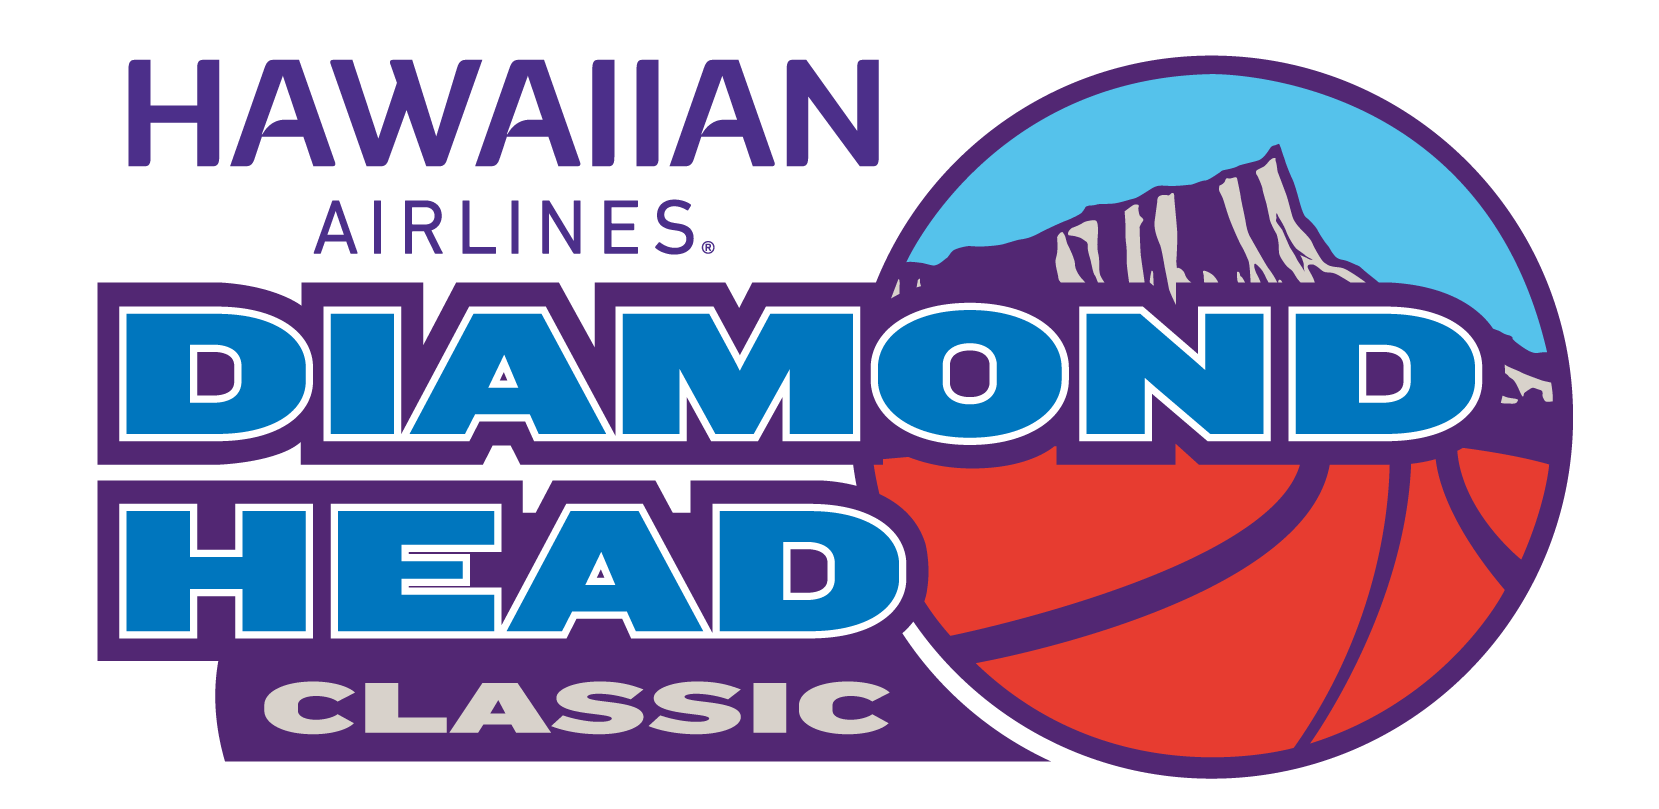 Hawaiian Airlines Diamond Head Classic Tickets On Sale Friday, November